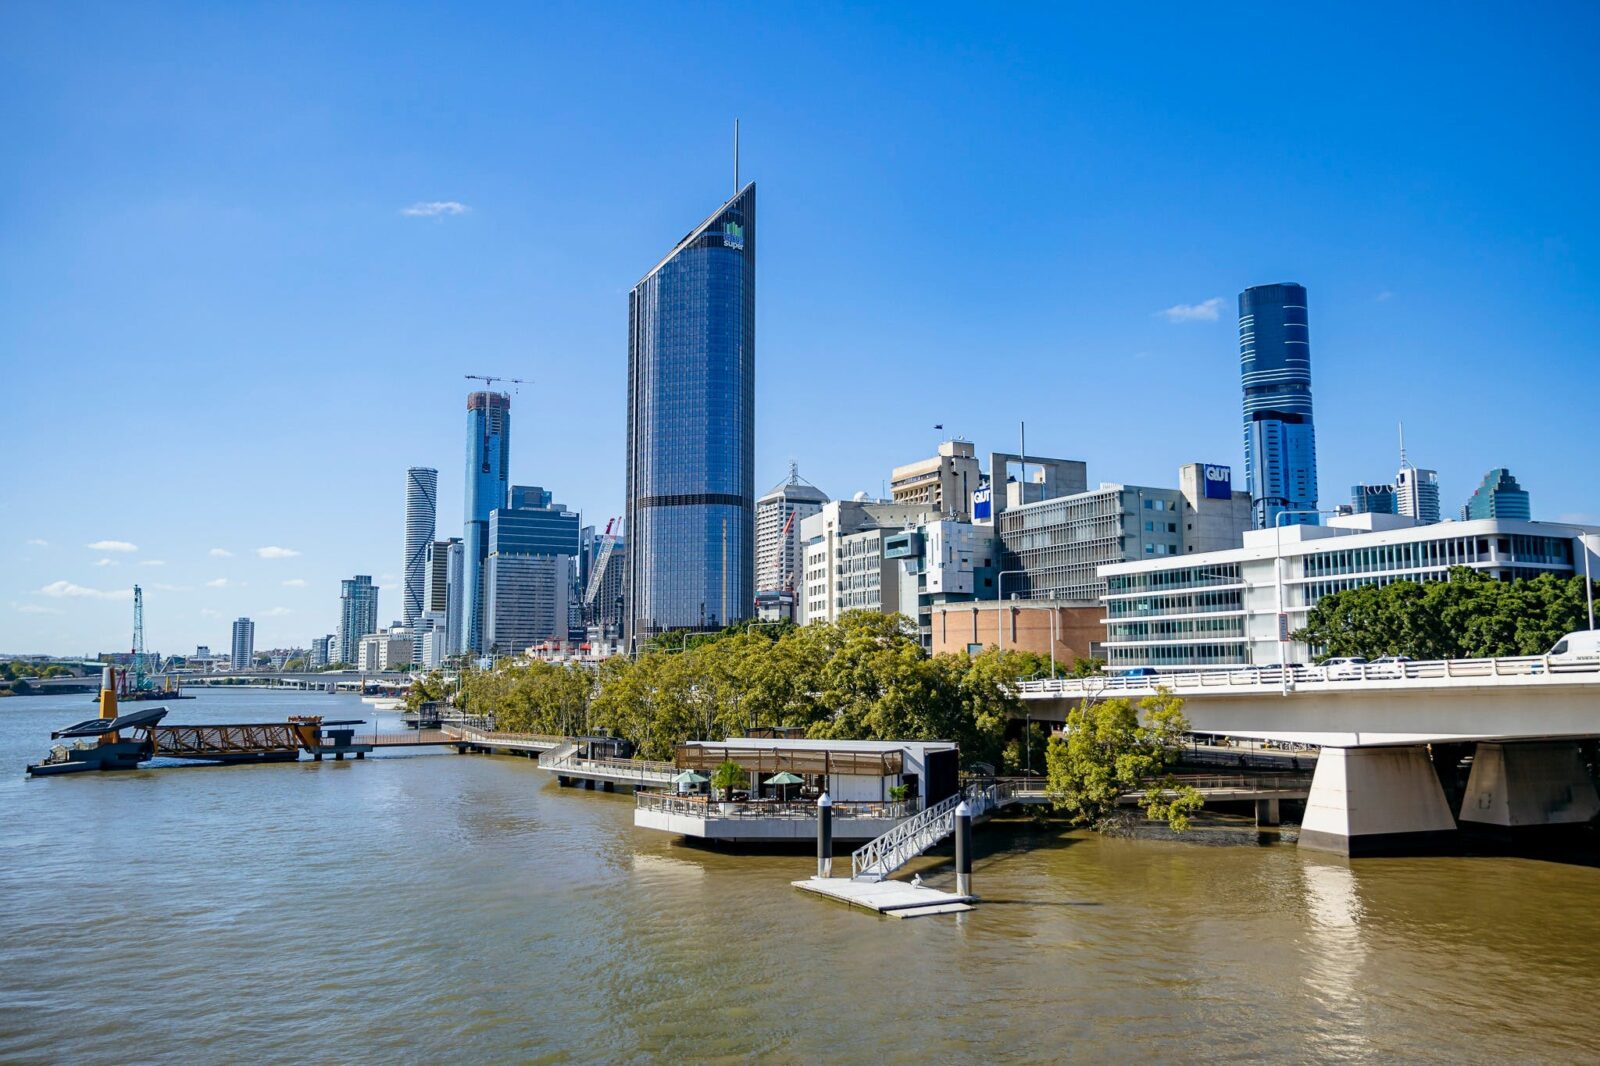 Will & Flow by Brisbane River